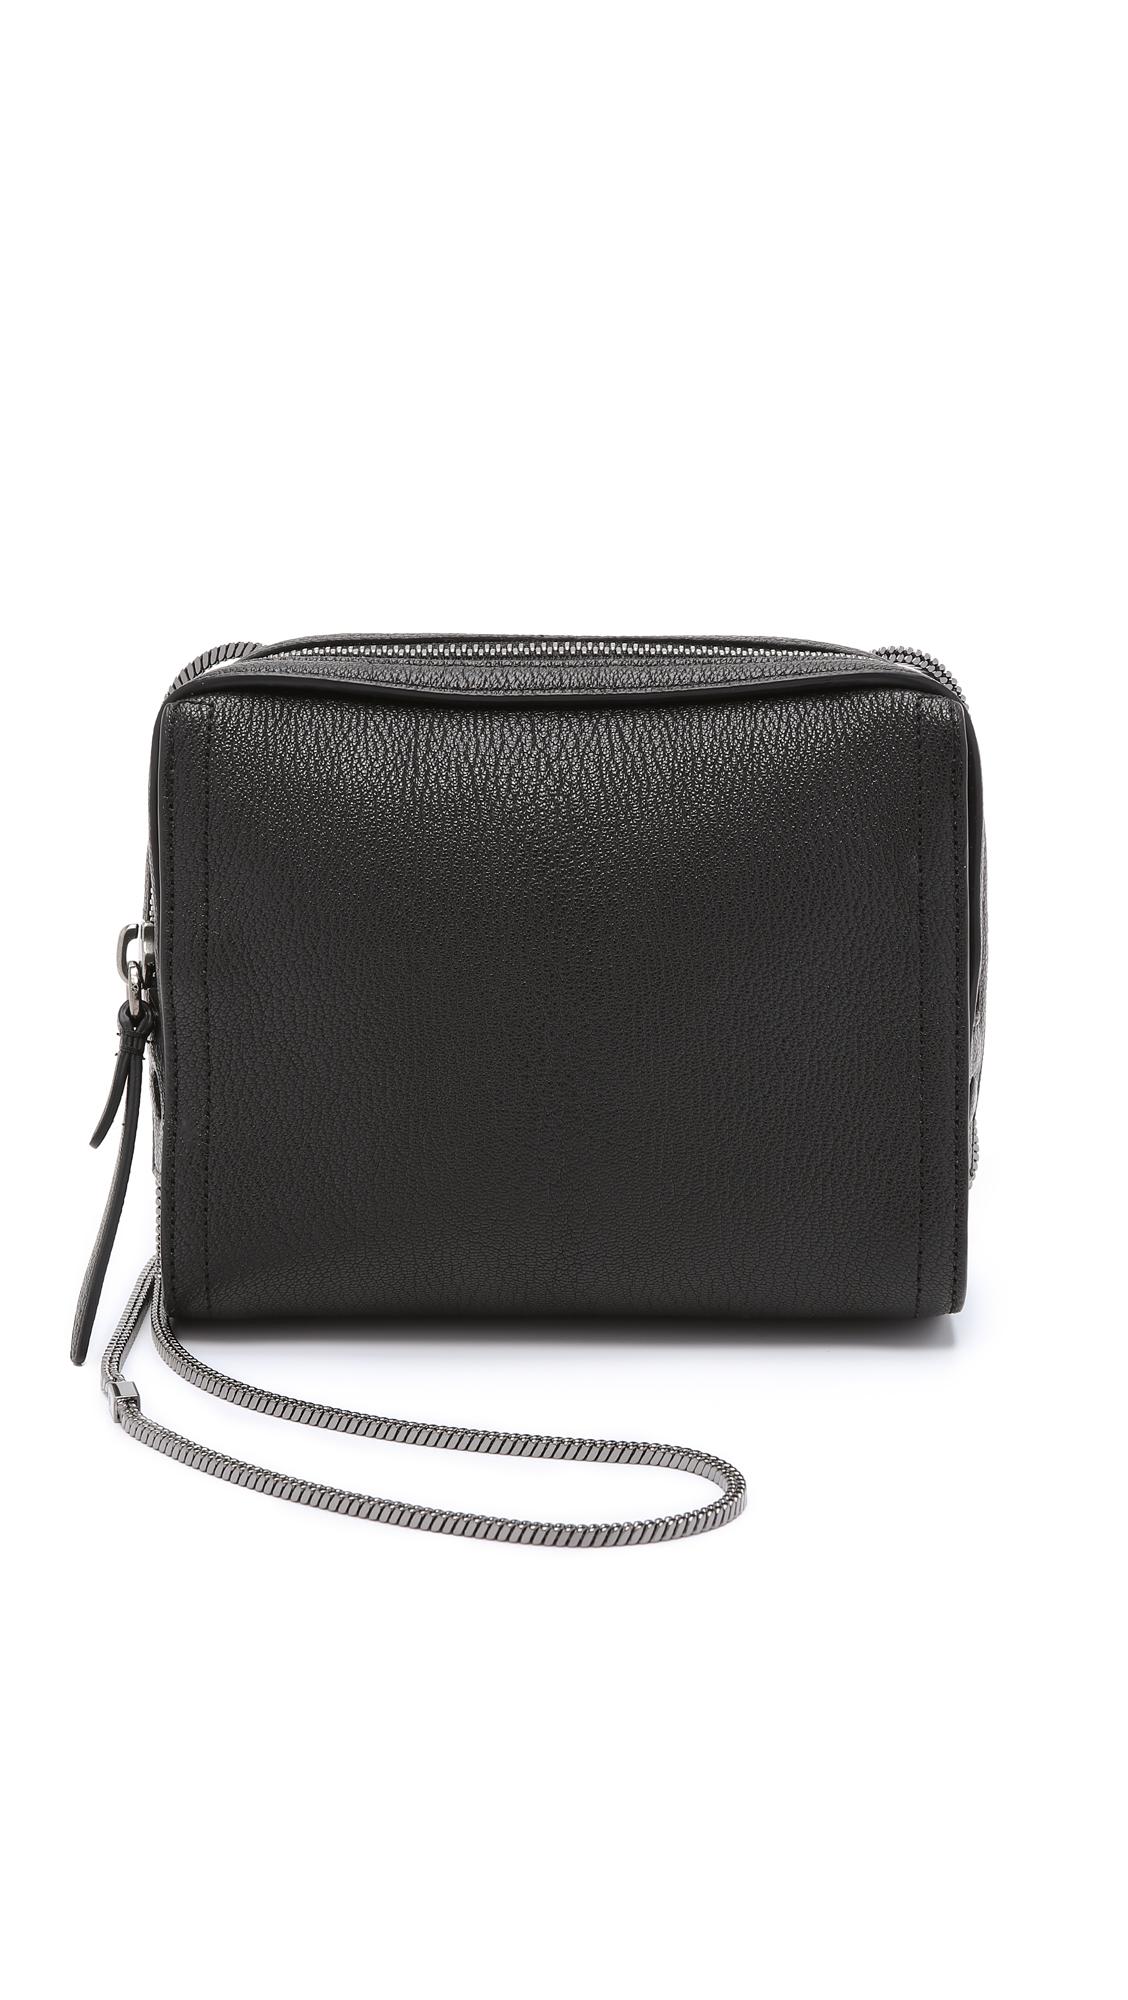 3.1 phillip lim Soleil Mini Zip Cross Body Bag in Black | Lyst